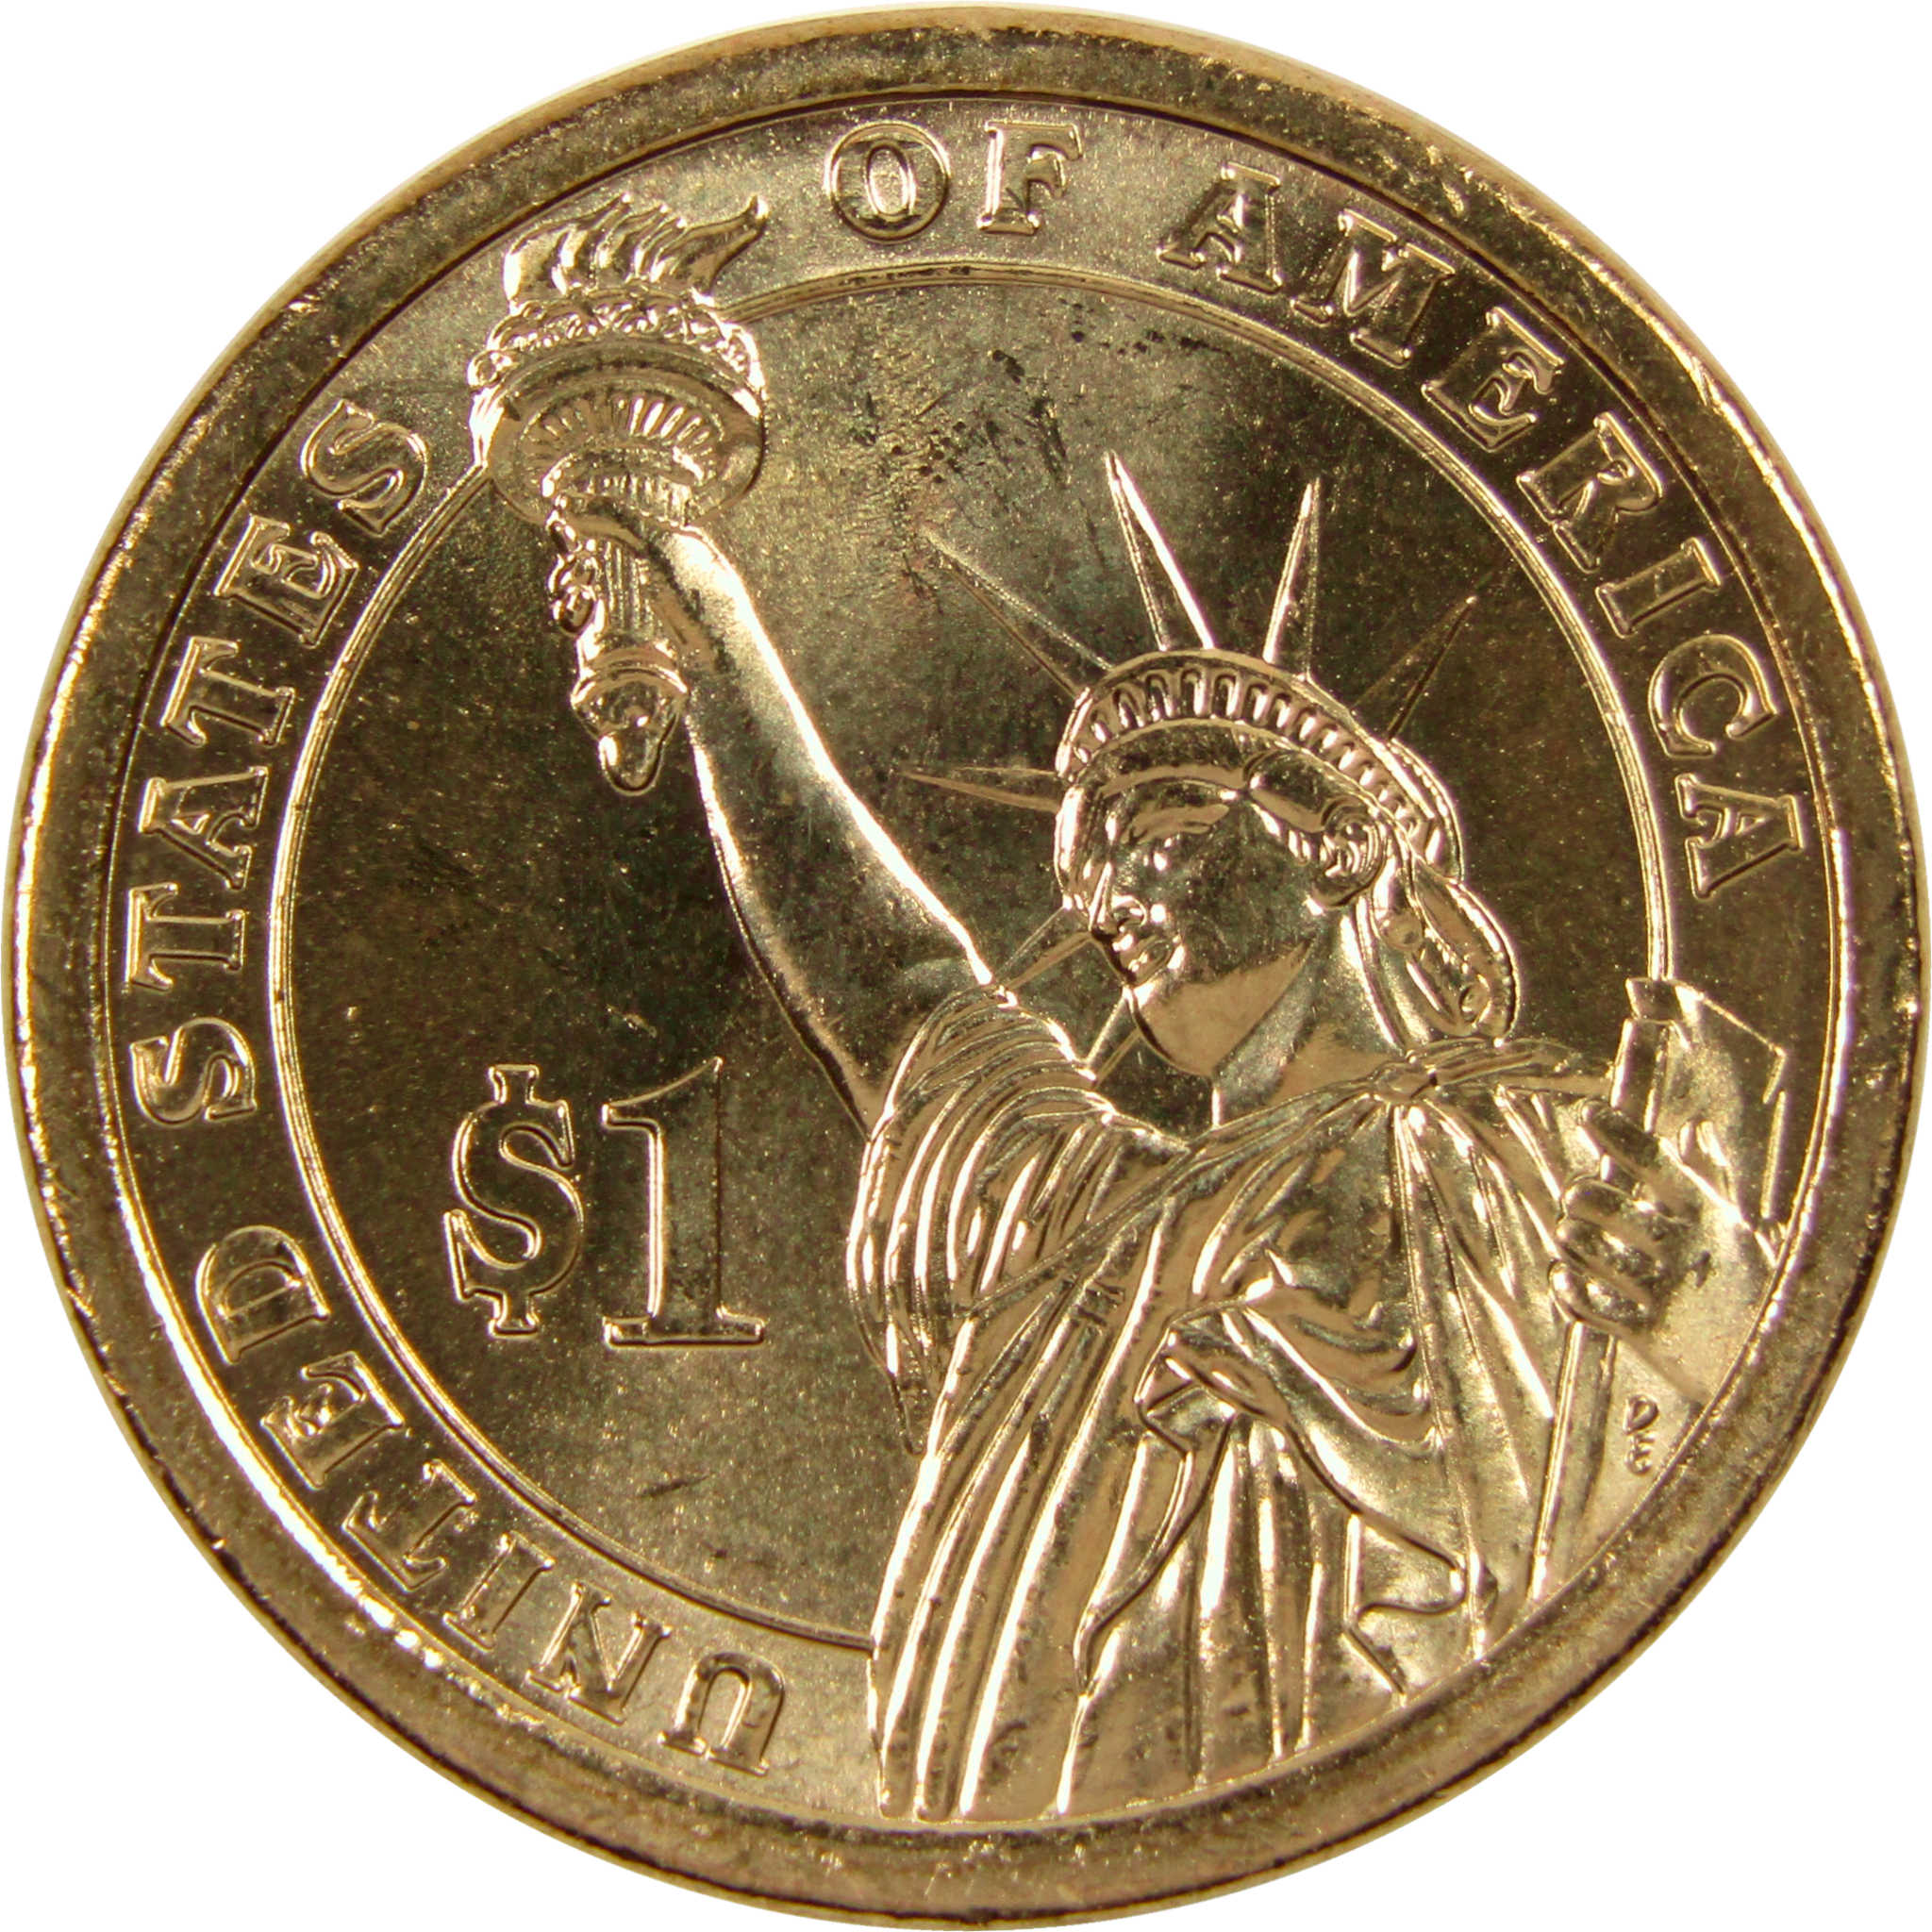 2010 P Millard Fillmore Presidential Dollar BU Uncirculated $1 Coin